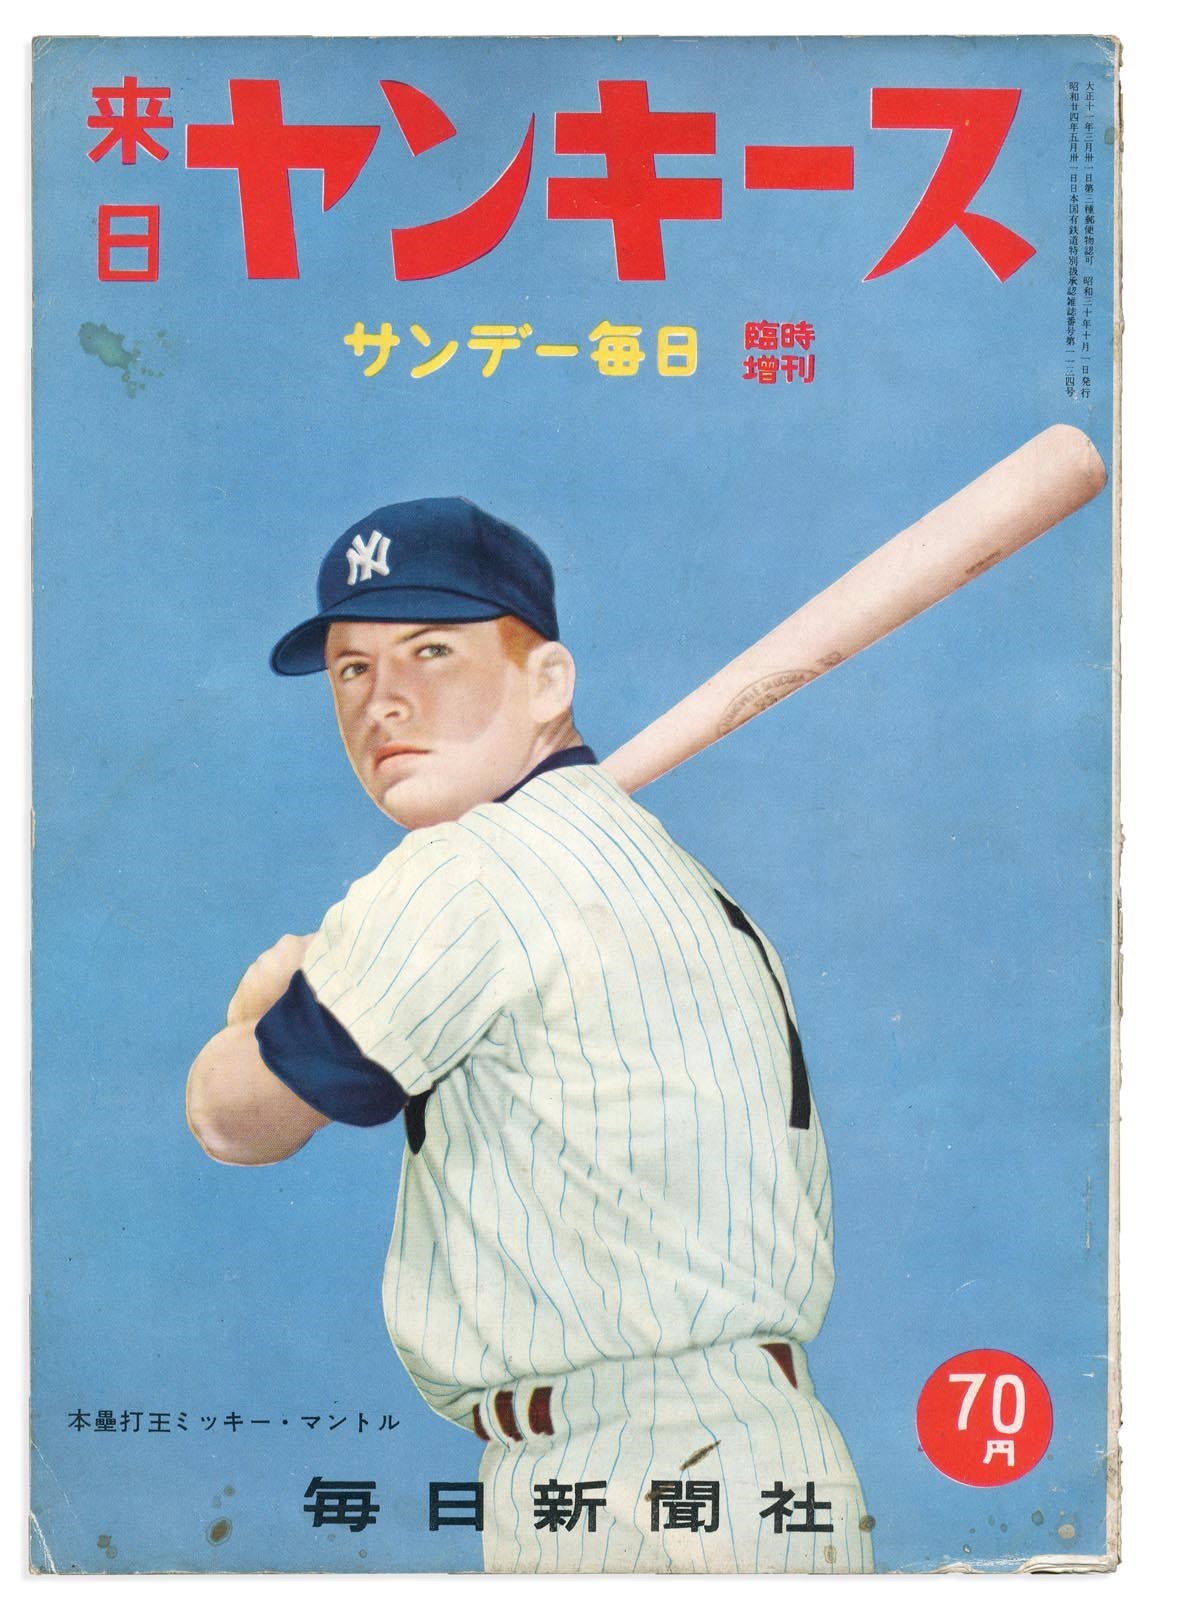 - Mickey Mantle 1955 New York Yankees Japan Tour Magazine